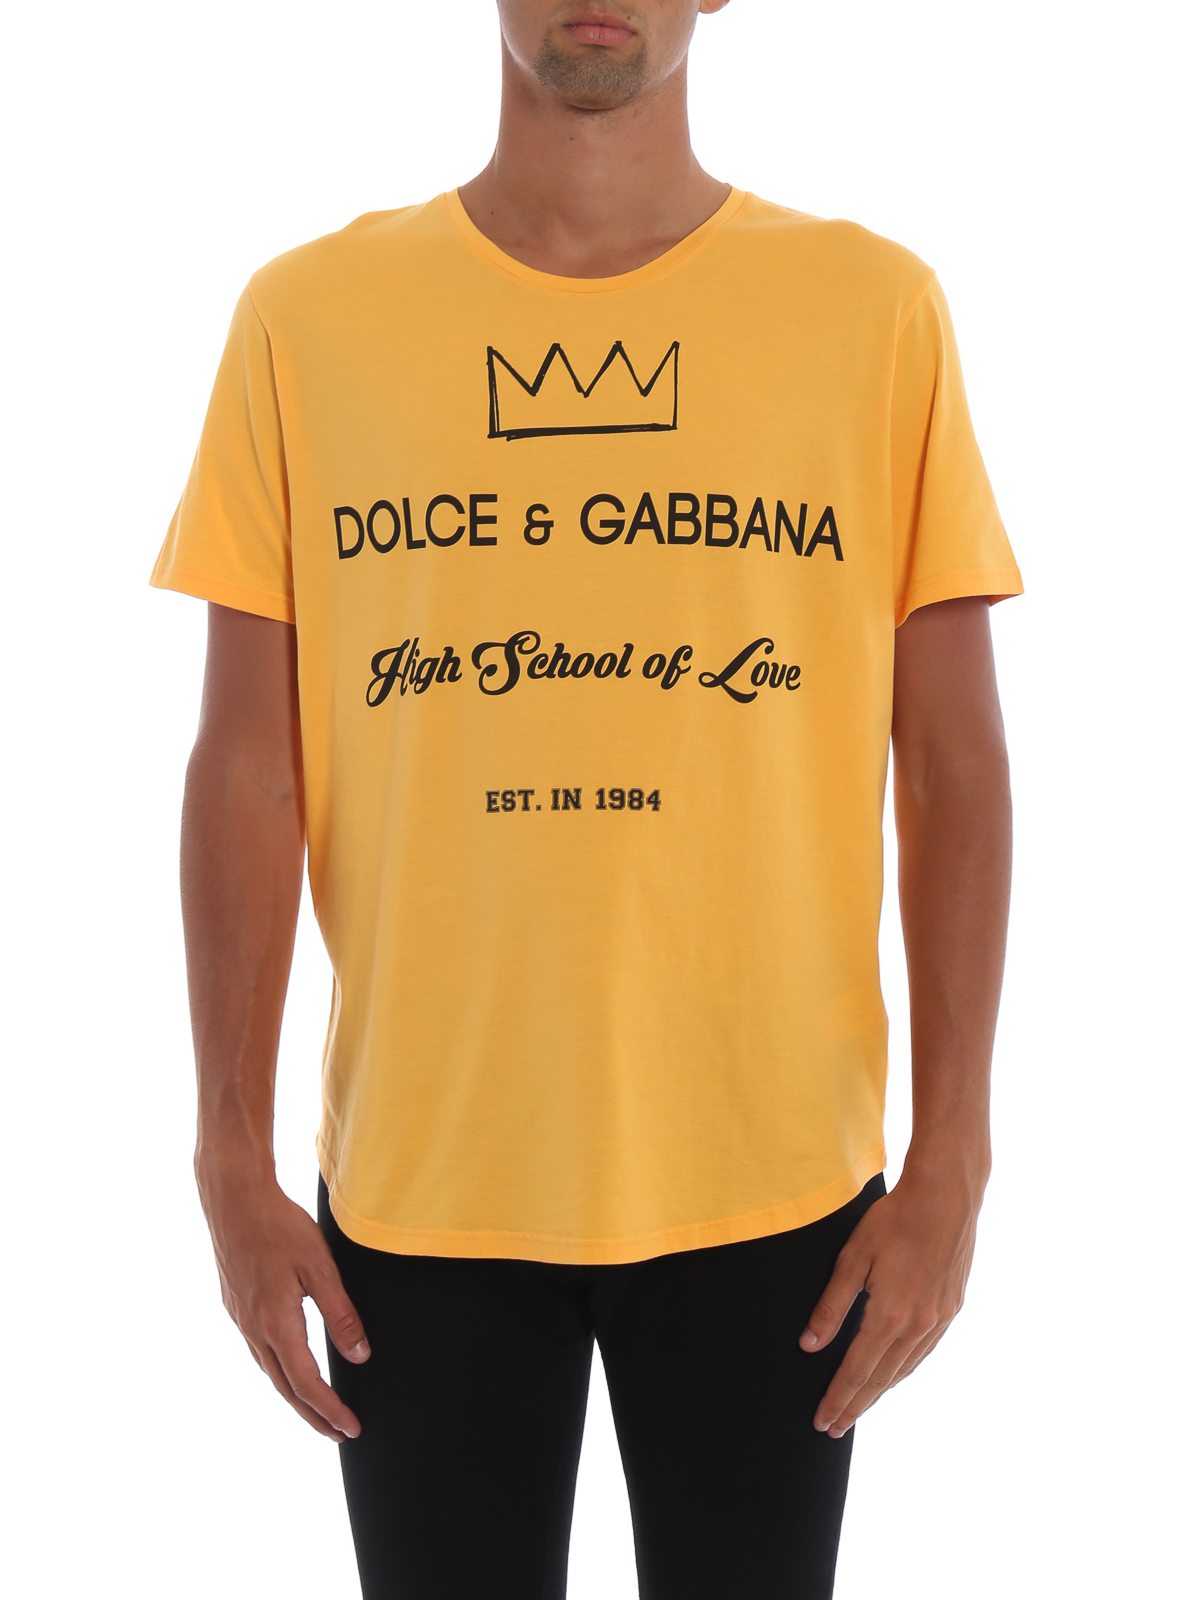 Dolce \u0026 Gabbana - High School of Love 